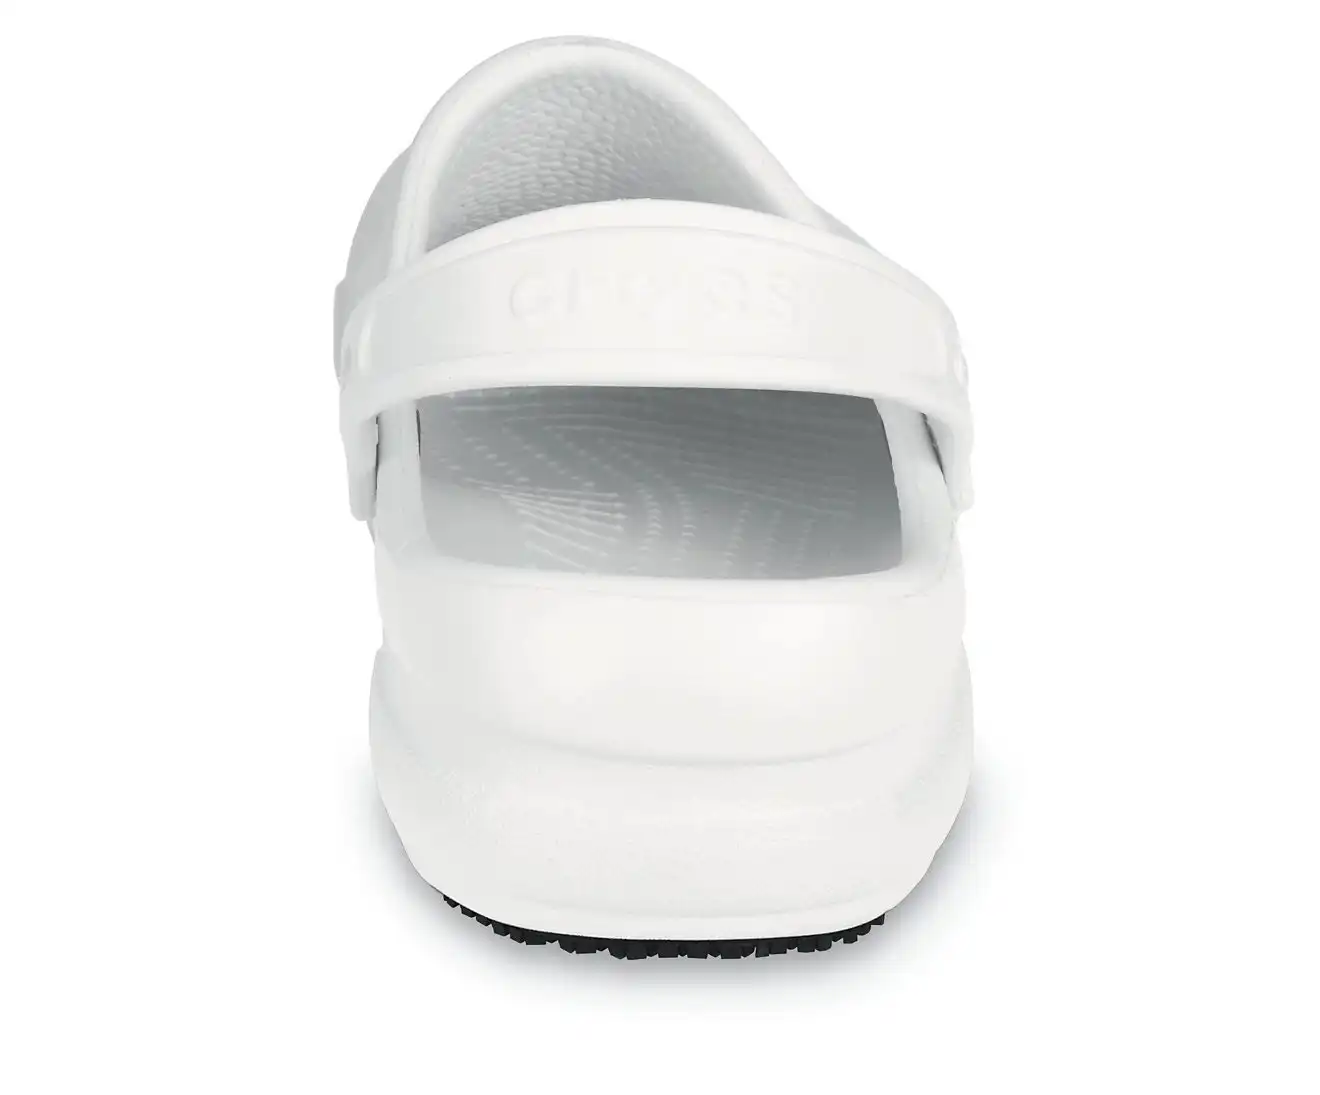 Crocs Bistro Clogs Men's Women's Slip-on Shoes Slippers Sandals (Unisex) - White